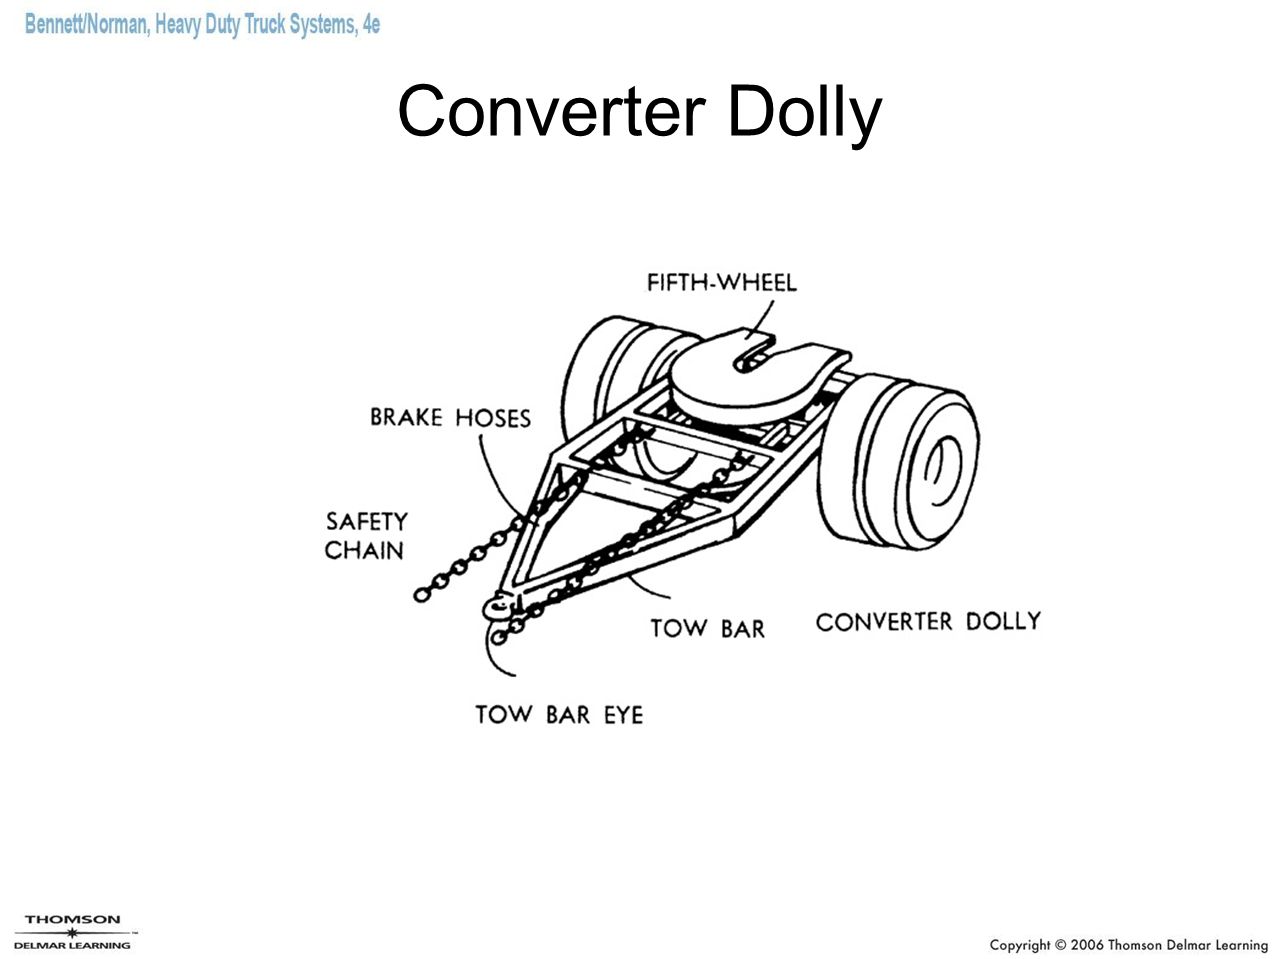 Converter Dolly